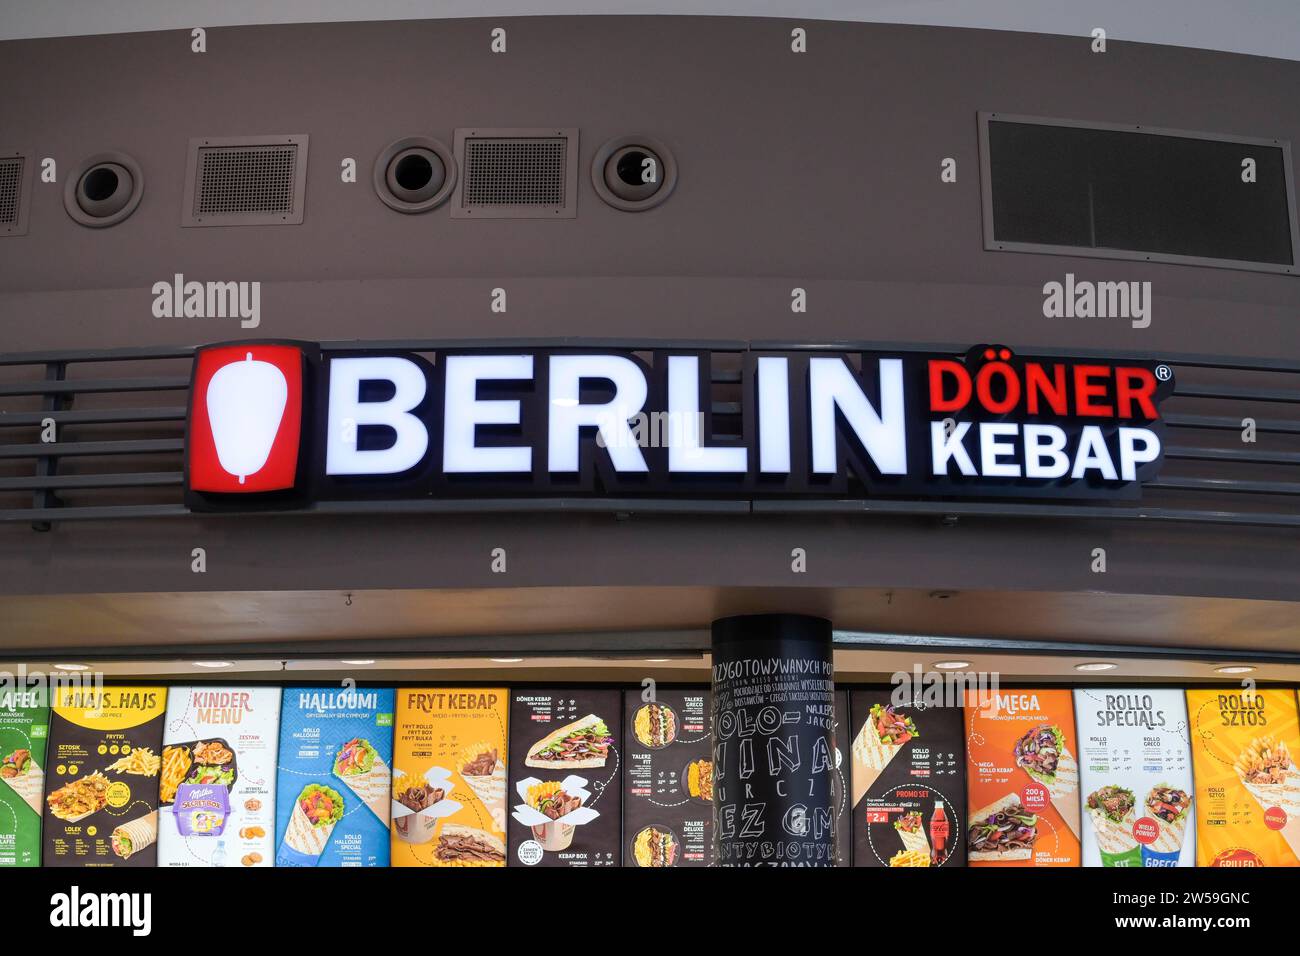 Berlin doner kebab snack bar, Avenida Poznan shopping centre, Poznan, Greater Poland Voivodeship, Poland Stock Photo